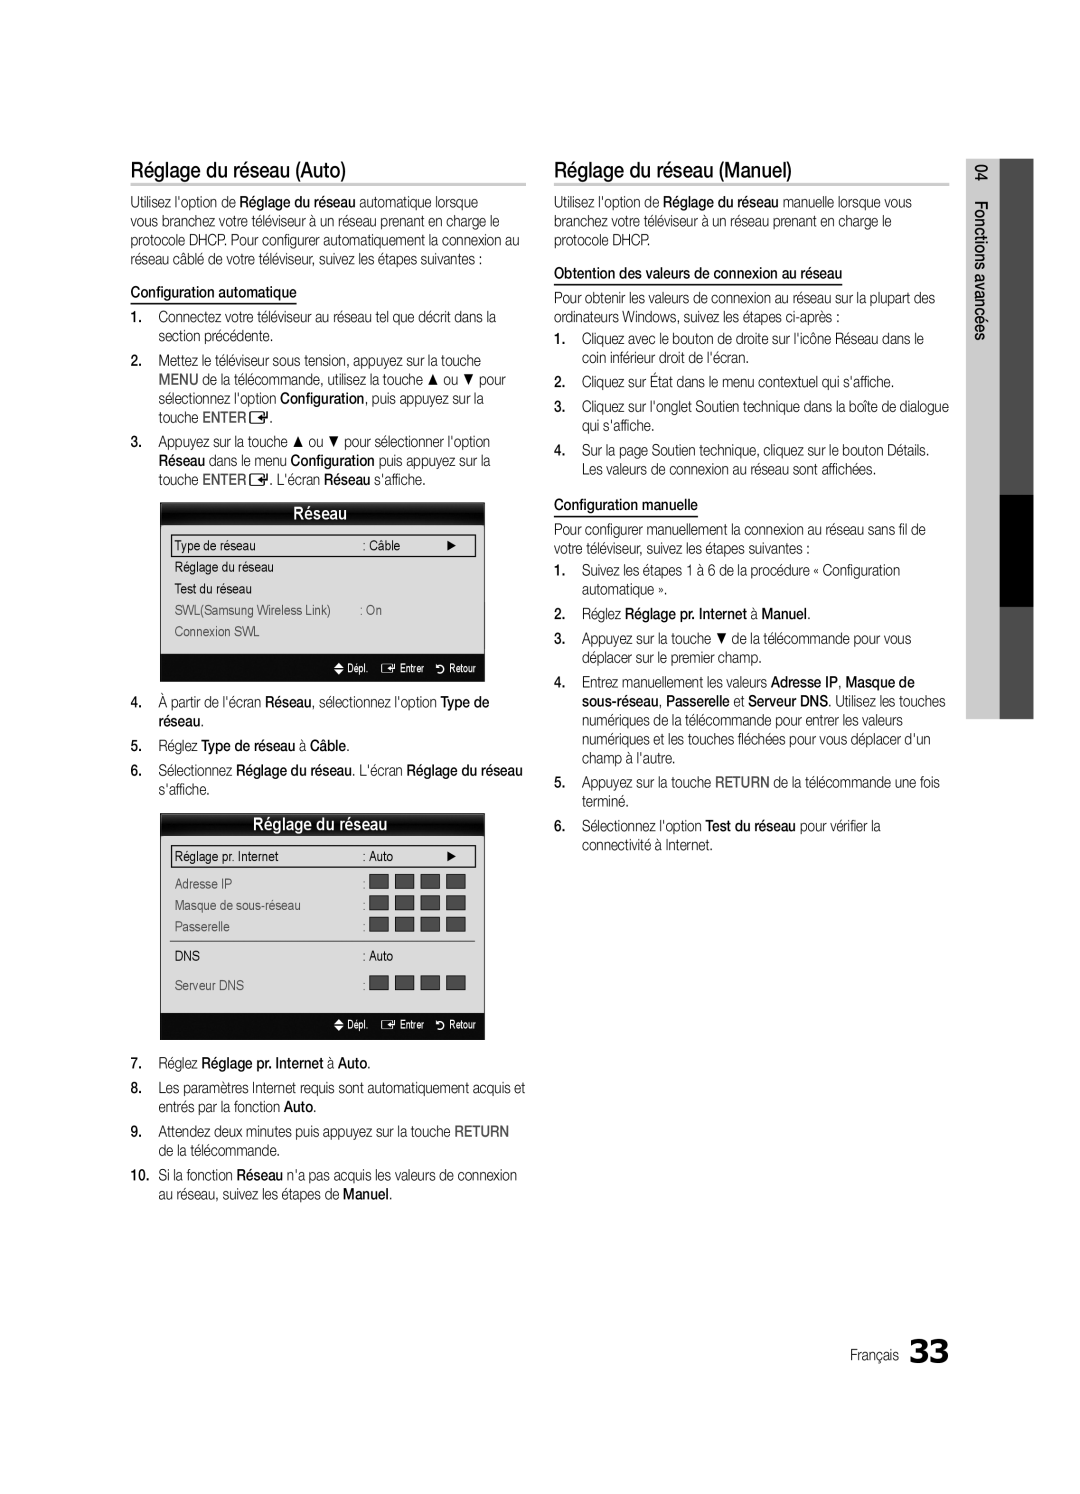 Samsung Series C9, BN68-03088A-01 user manual Réglage du réseau Auto, Réglage du réseau Manuel, Réseau 